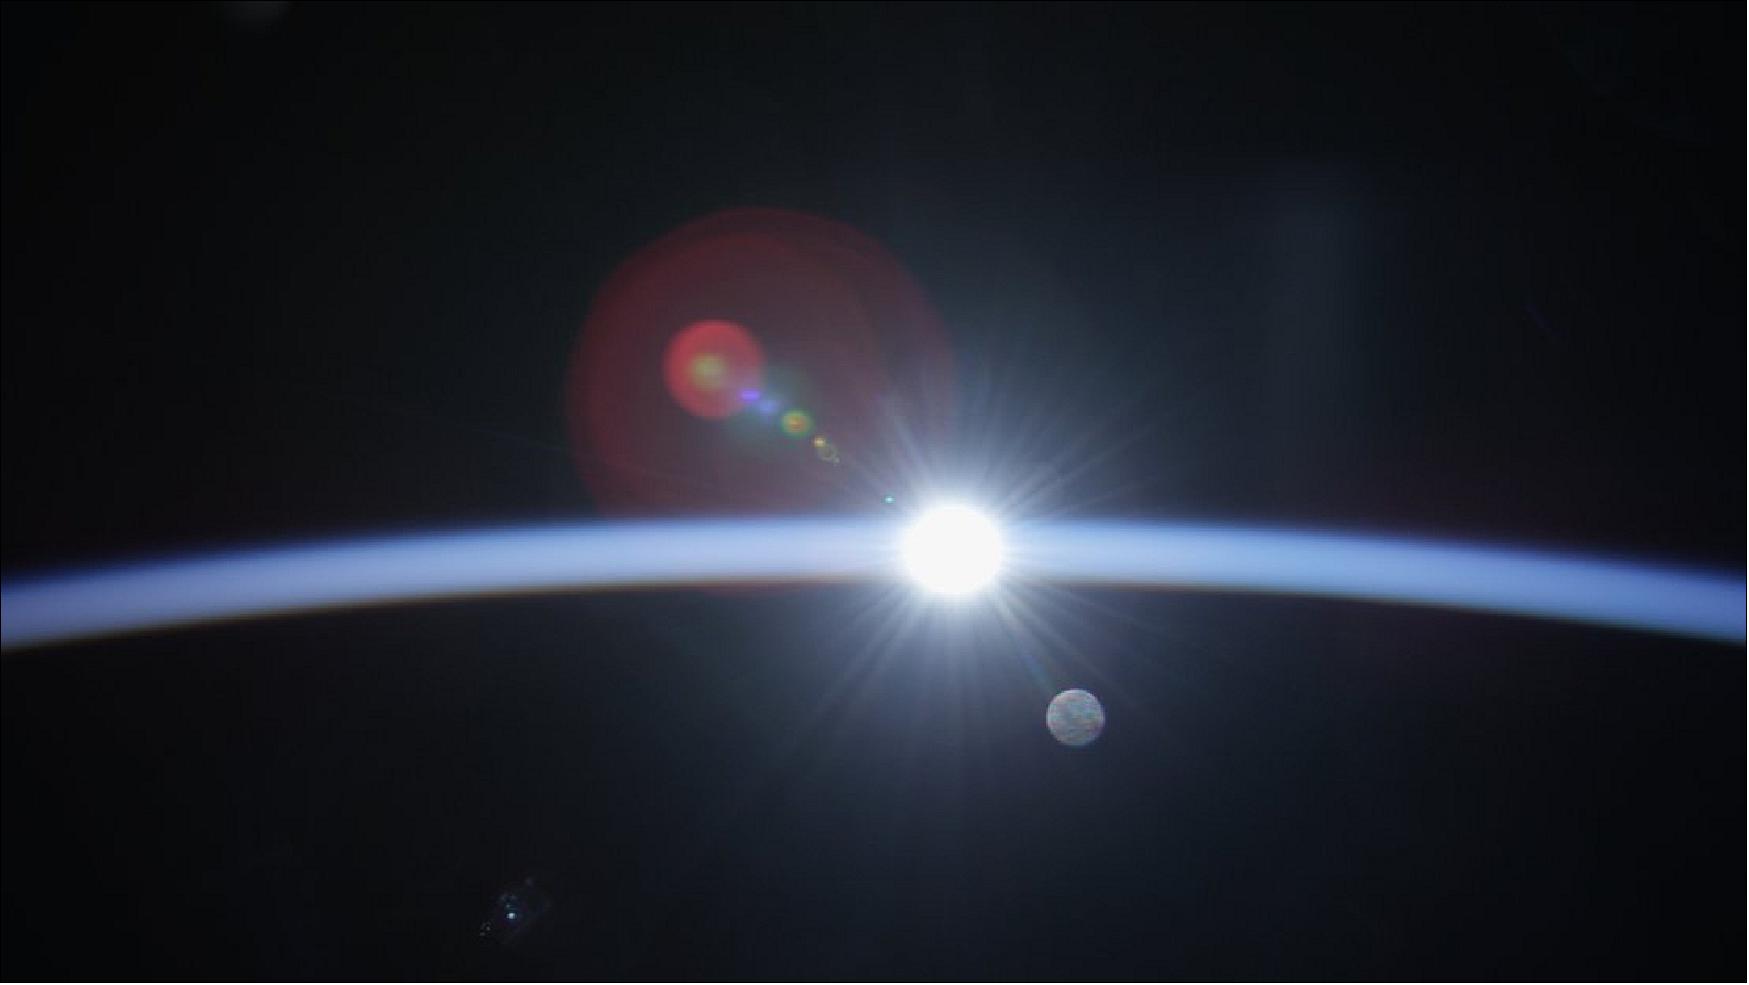 Figure 12: Sunrise seen from the International Space Station by ESA astronaut Paolo Nespoli (image credit: ESA/NASA)